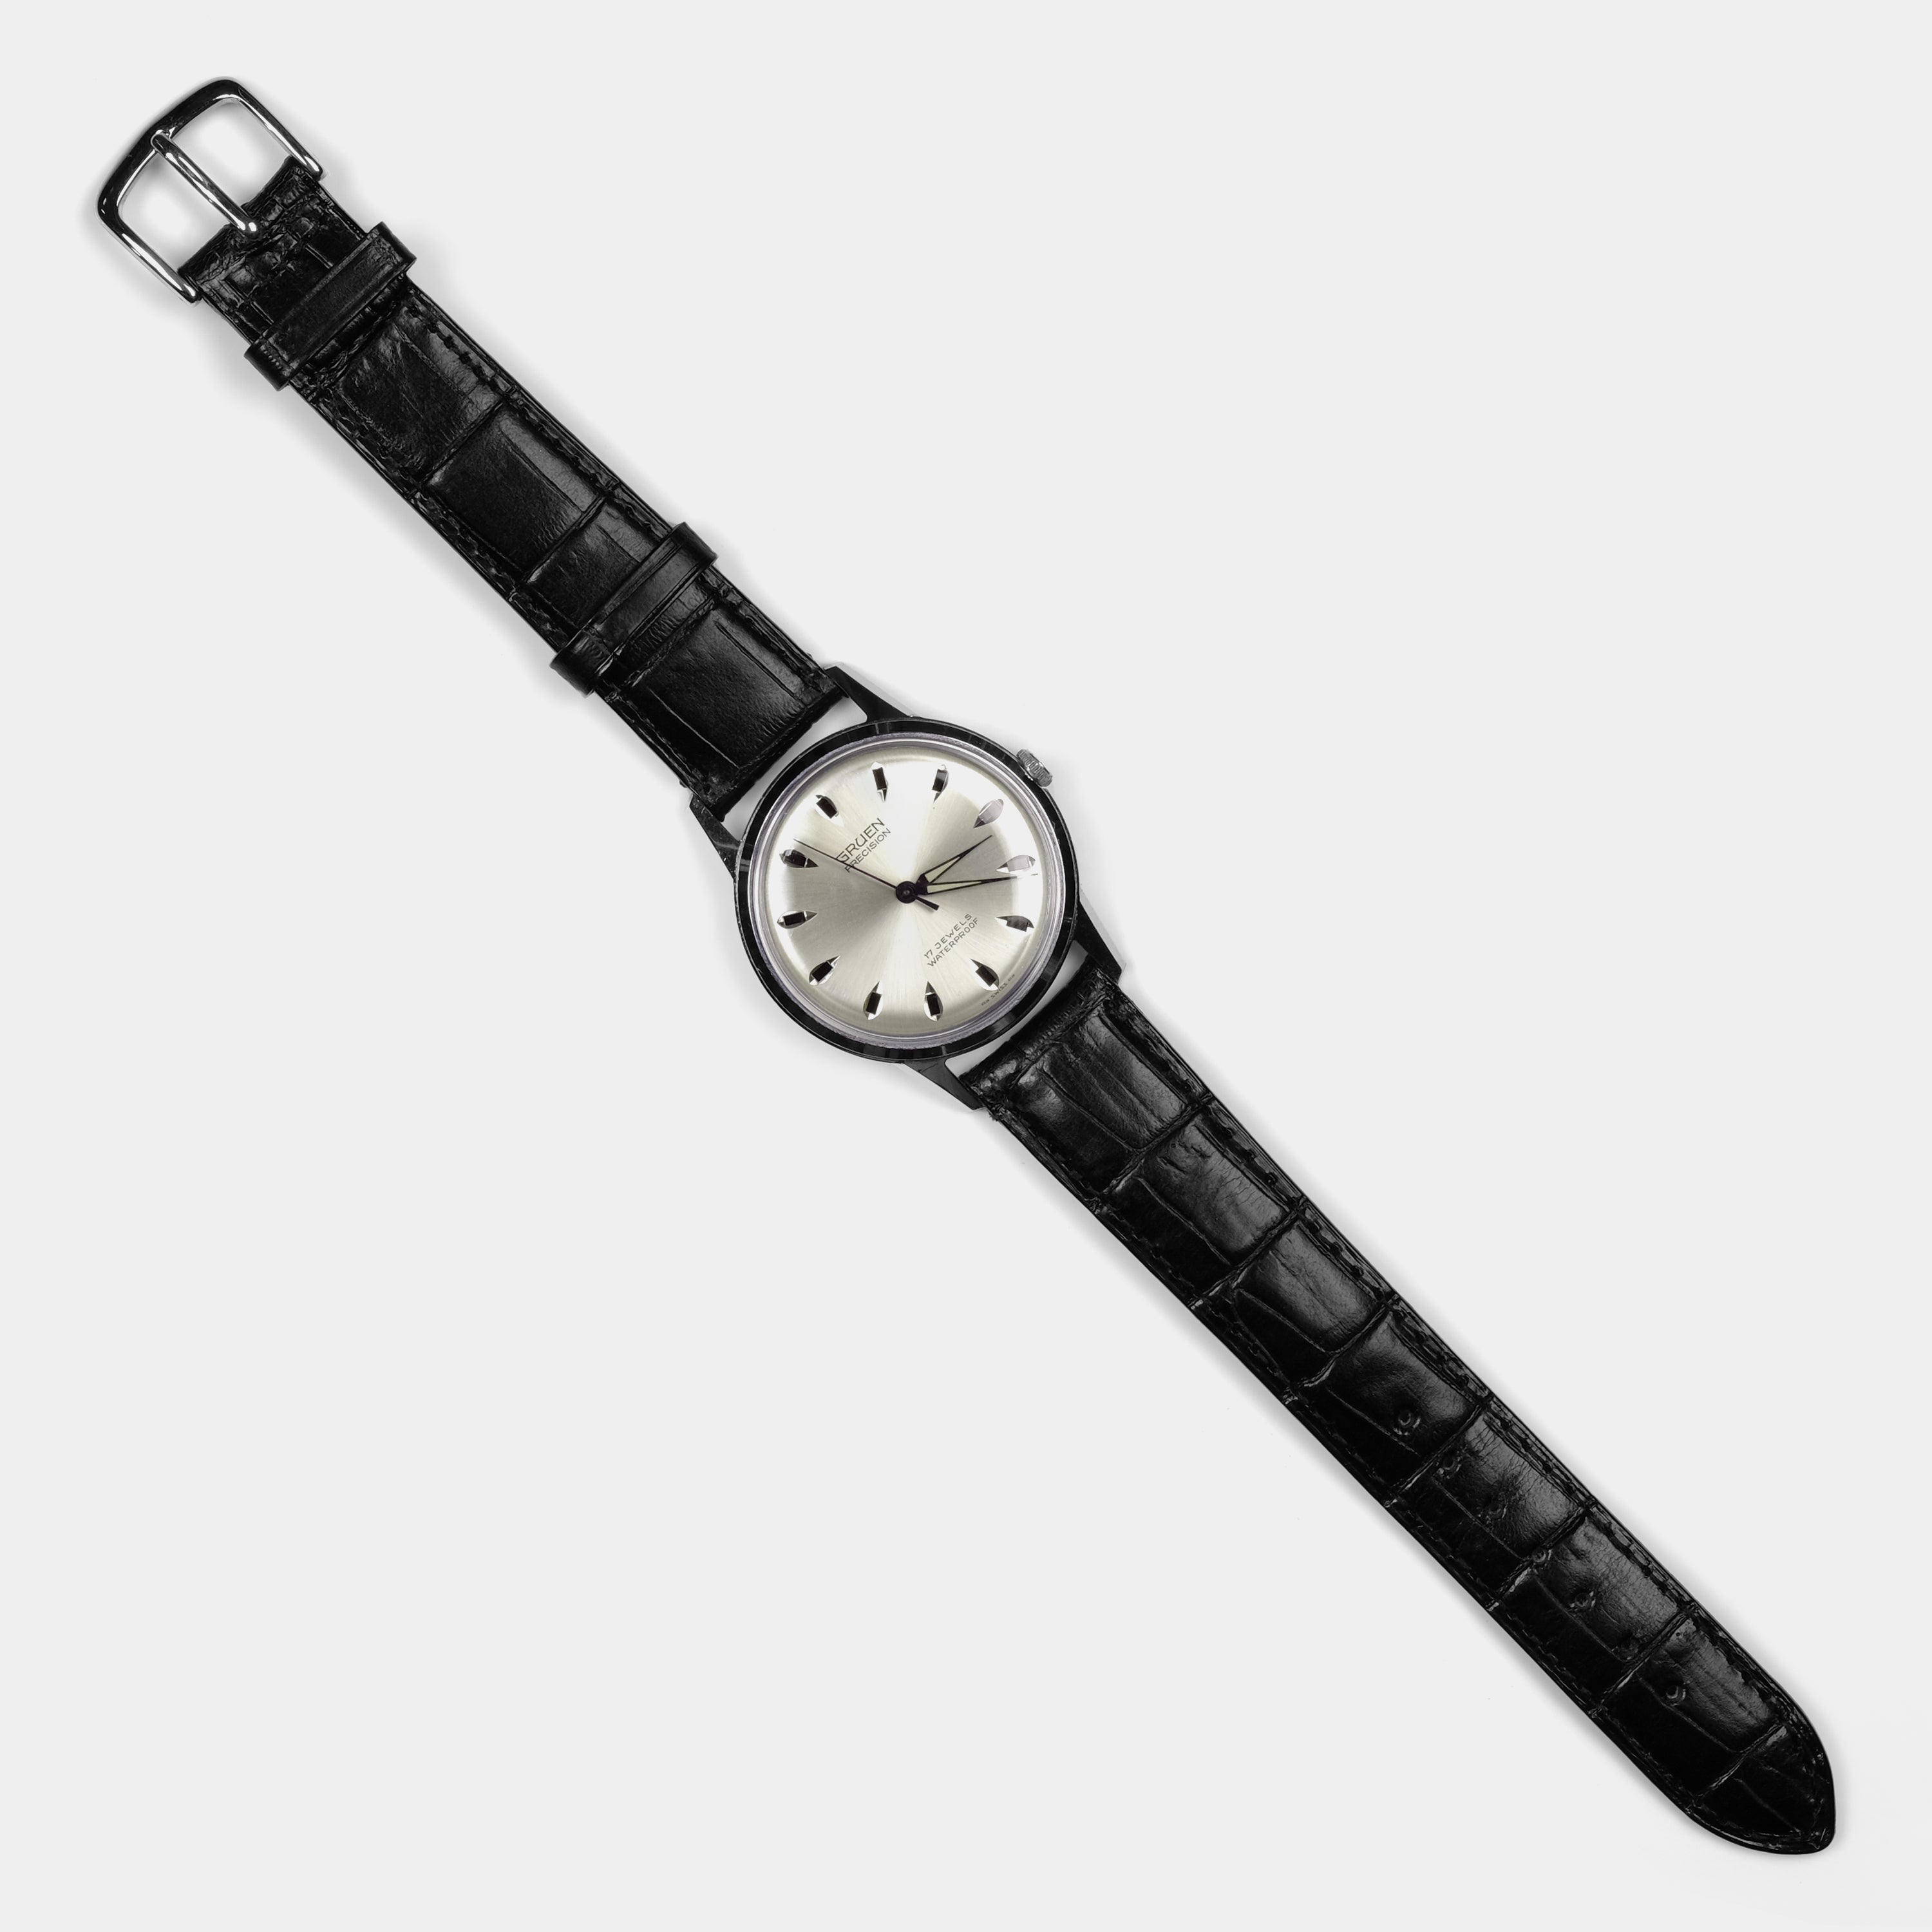 Gruen Day-Nite "Jump" Dial ref. 510 RSS CA Silver Sunburst Dial 1960s Wristwatch